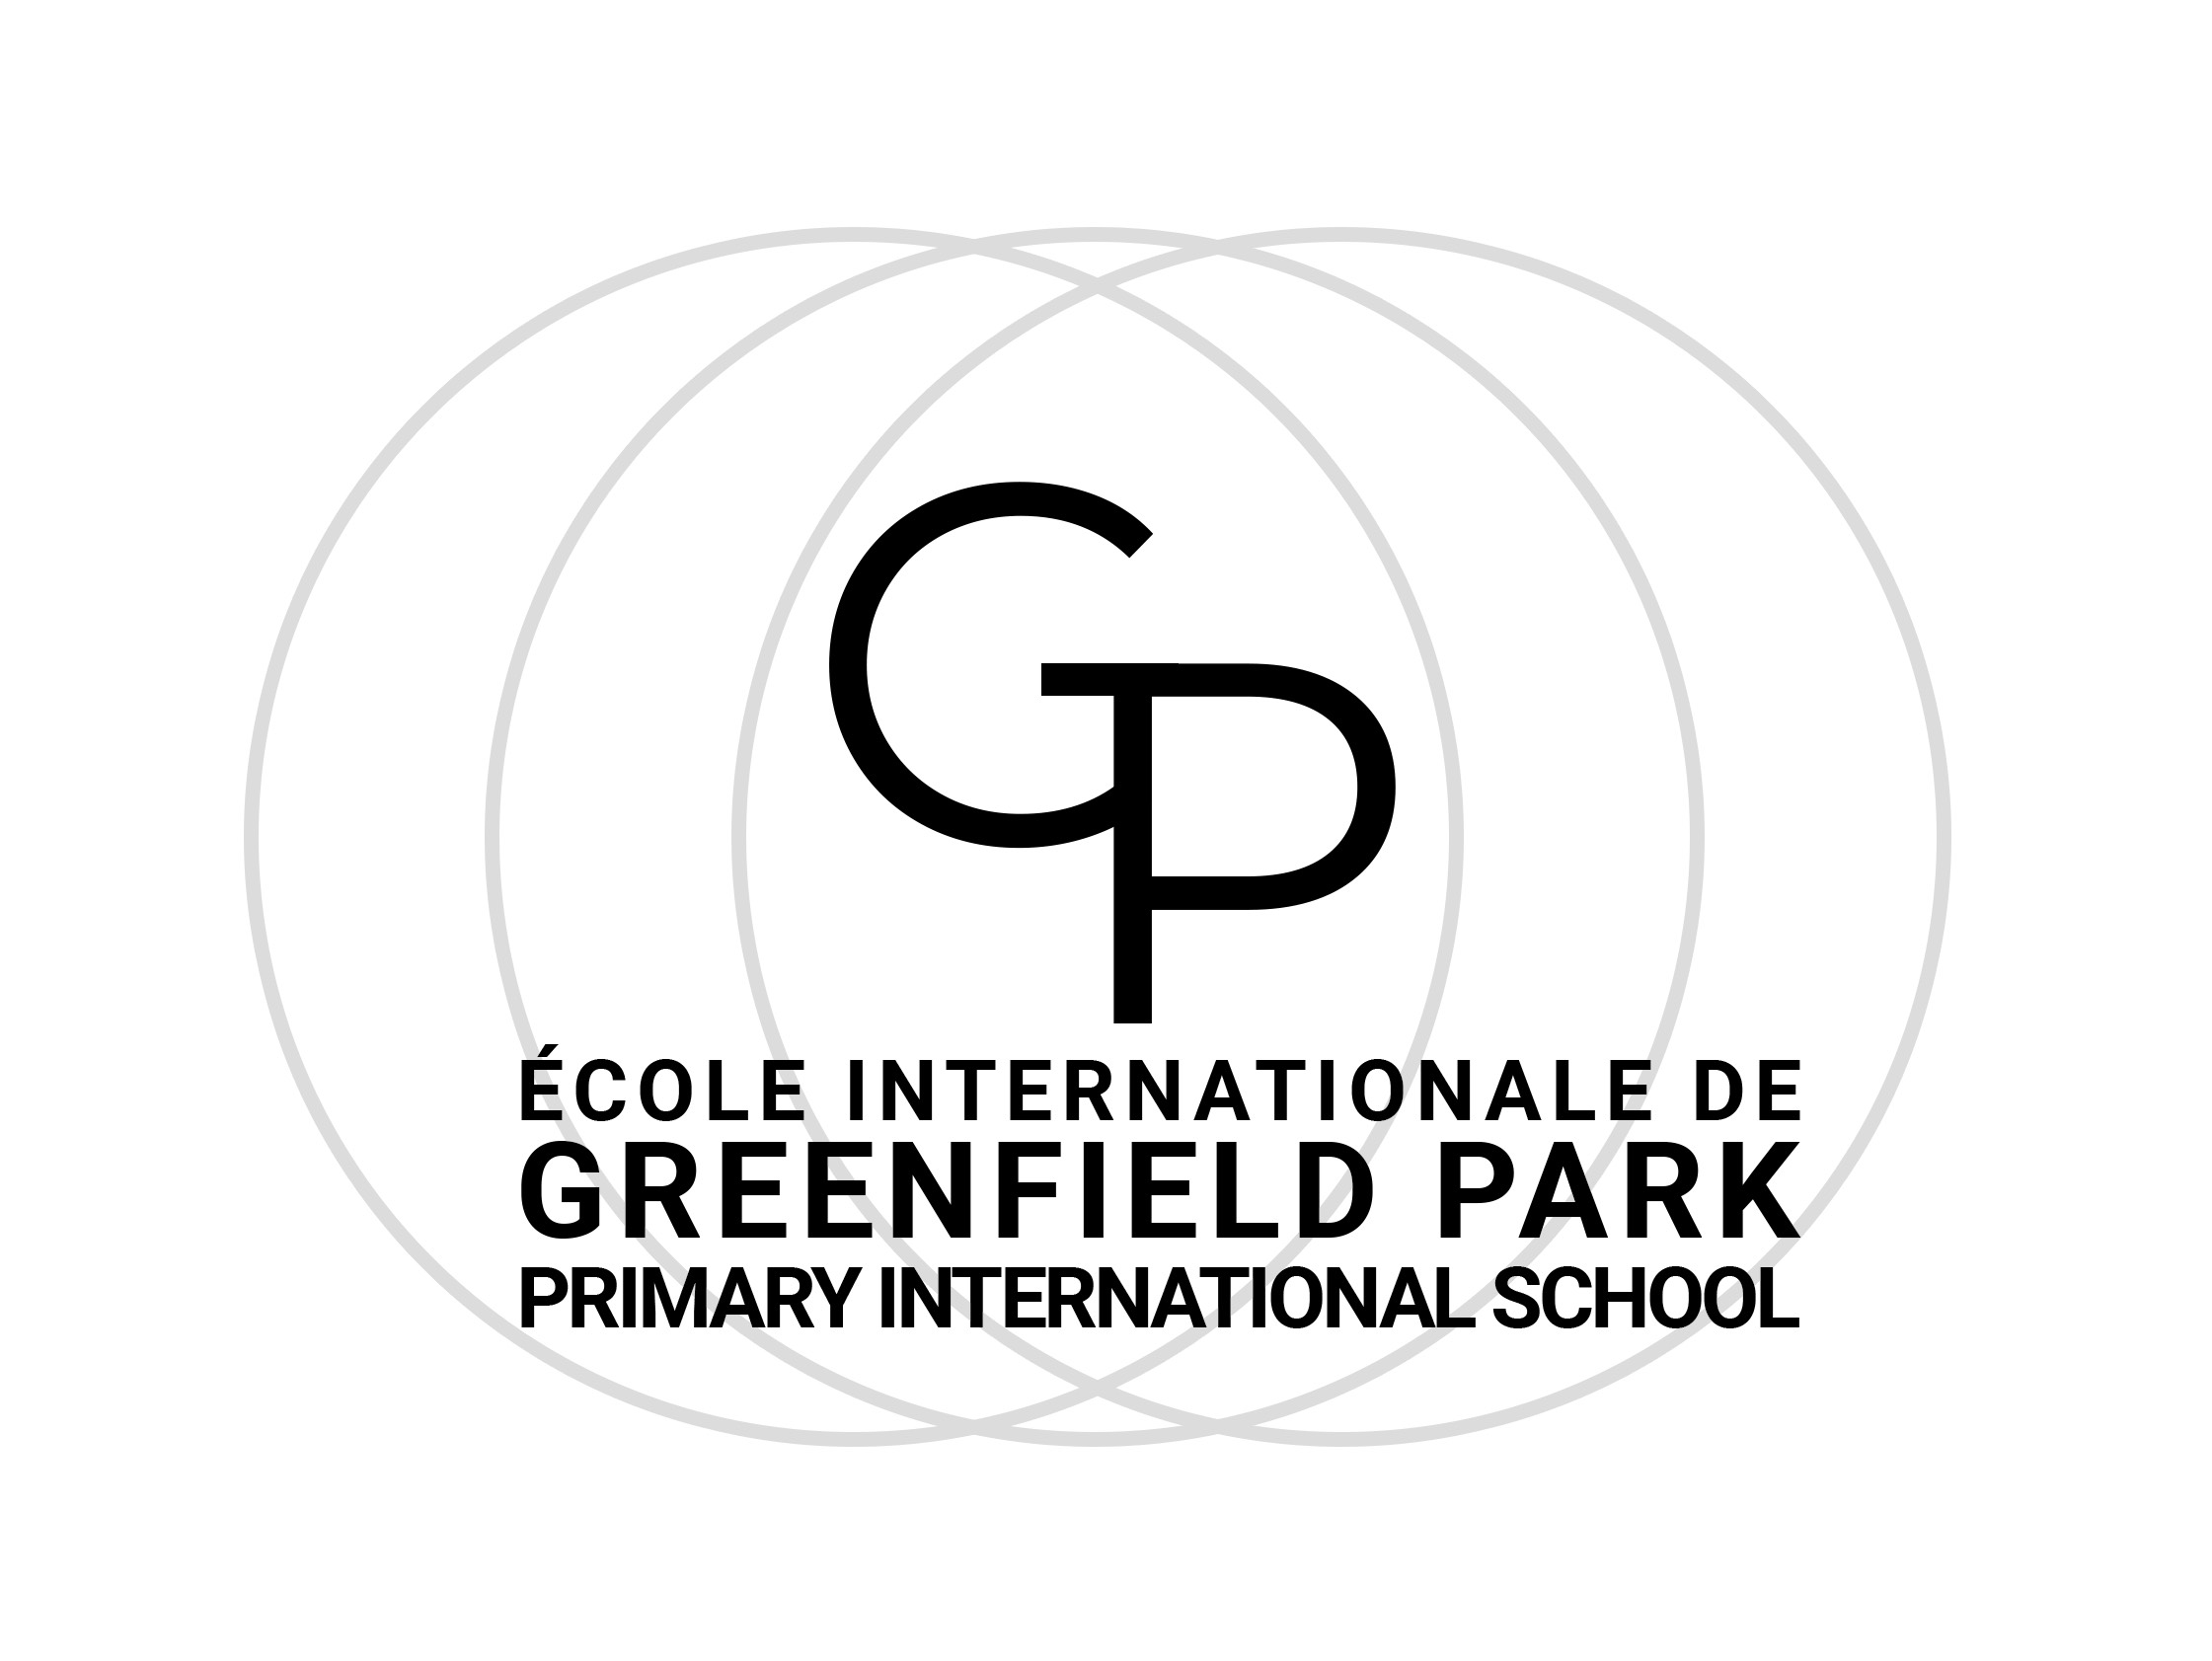 Greenfield Park primary international school